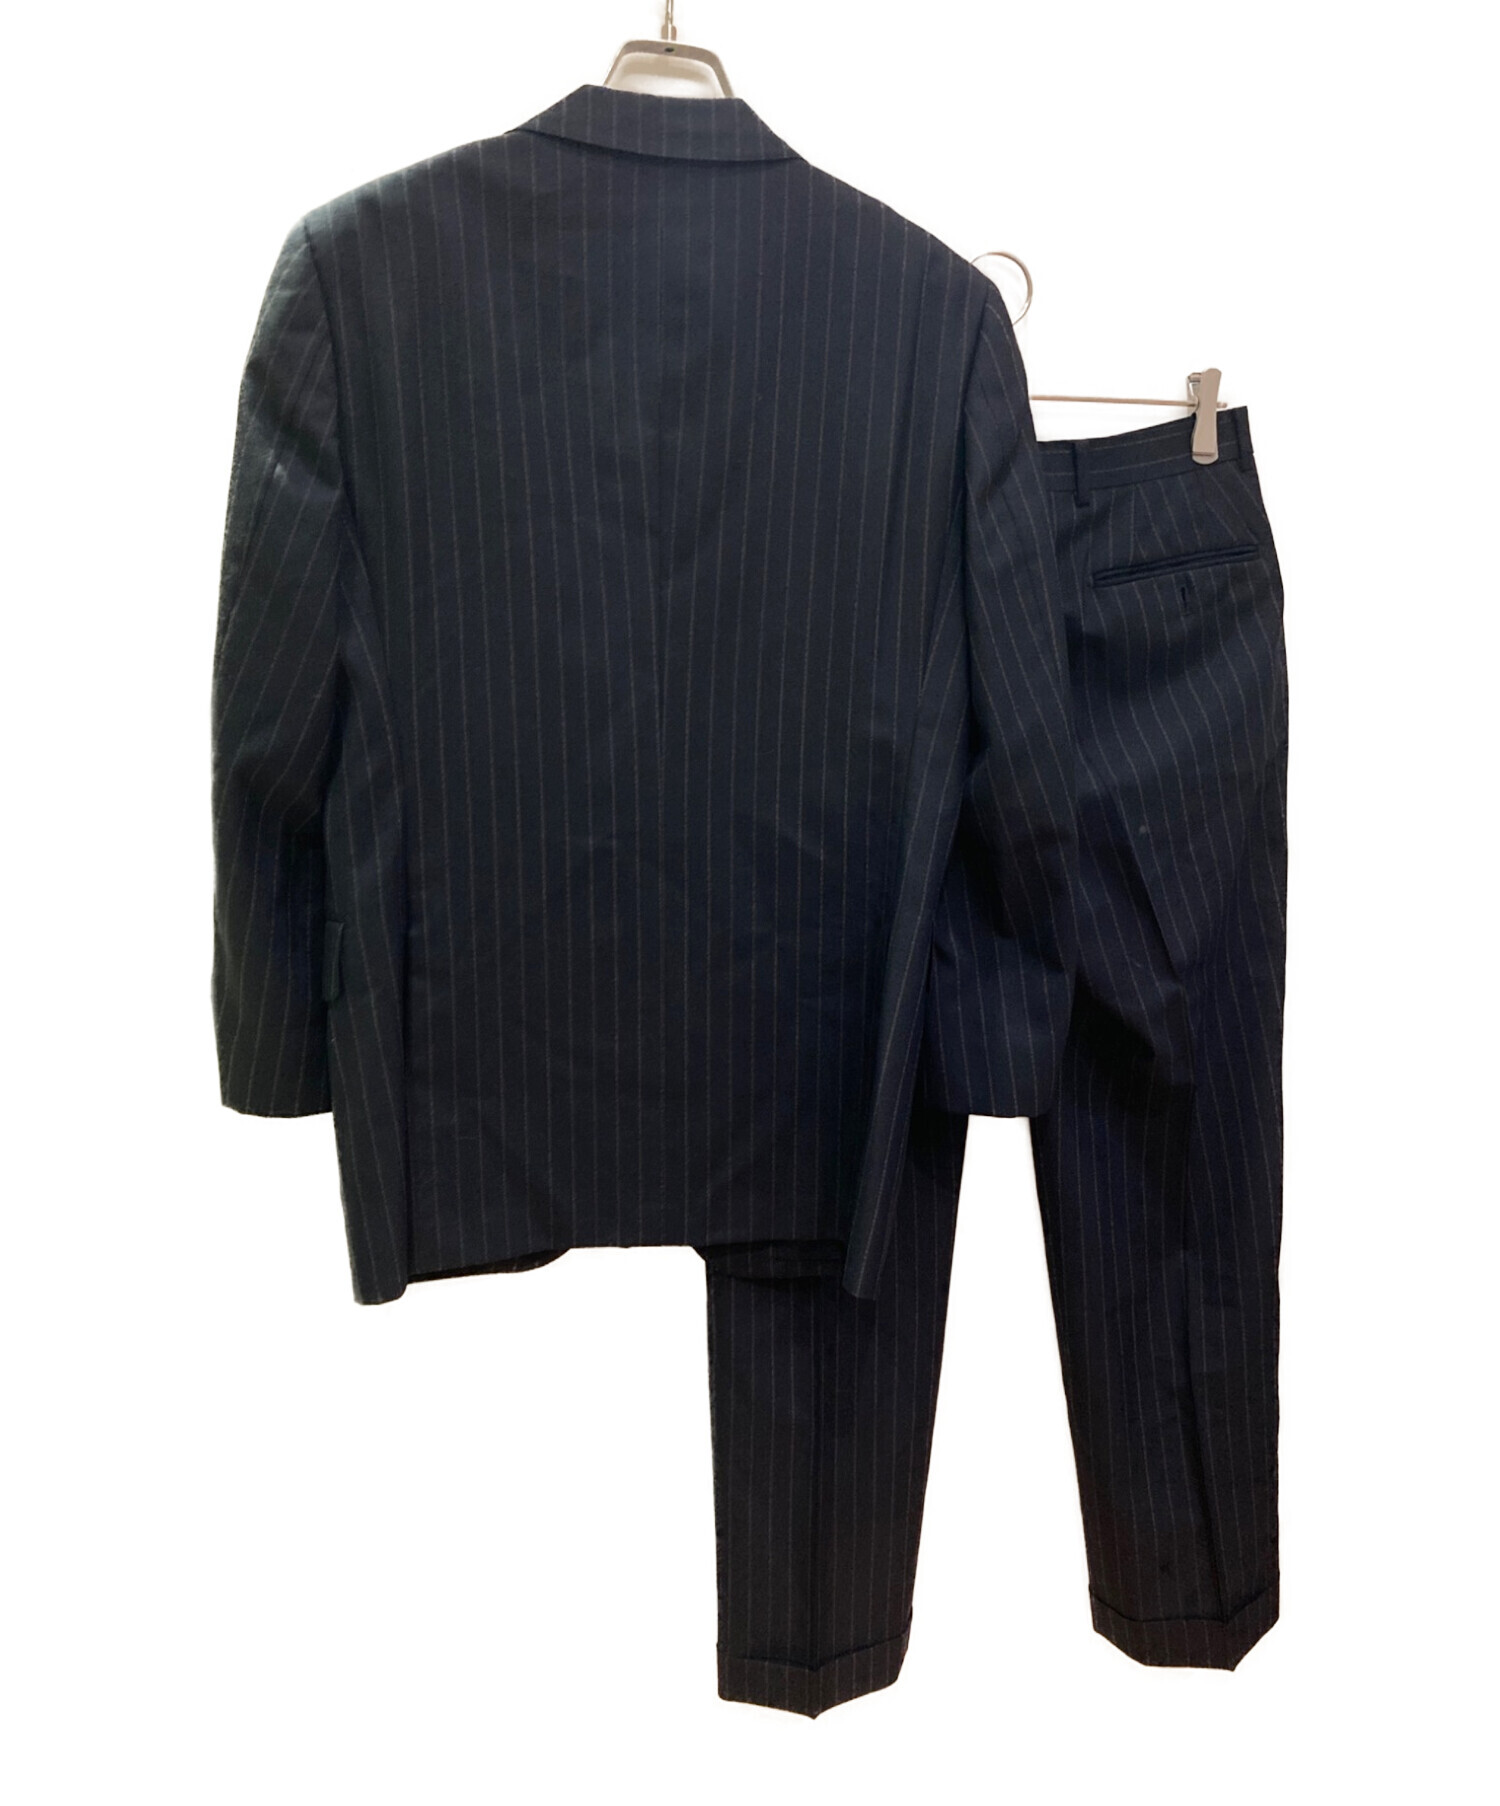 Ring jacket リングジャケット スーツ サイズ44 - スーツ